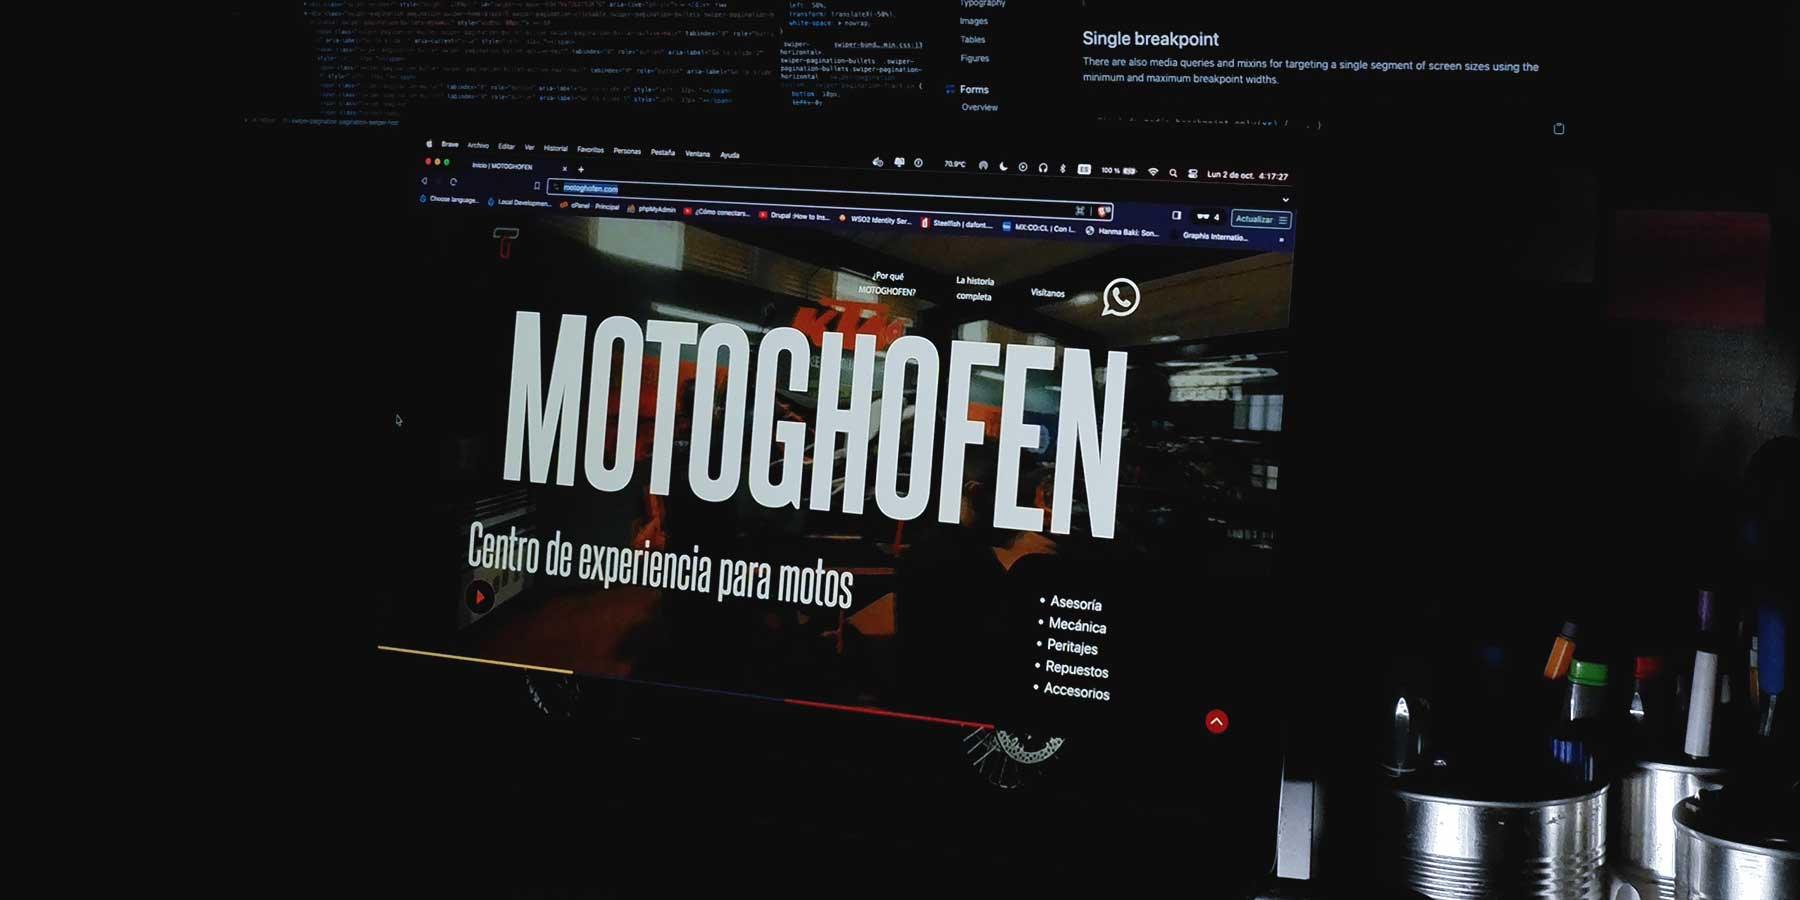 MOTOGHOFEN's website Home screen shown in a laptop computer.